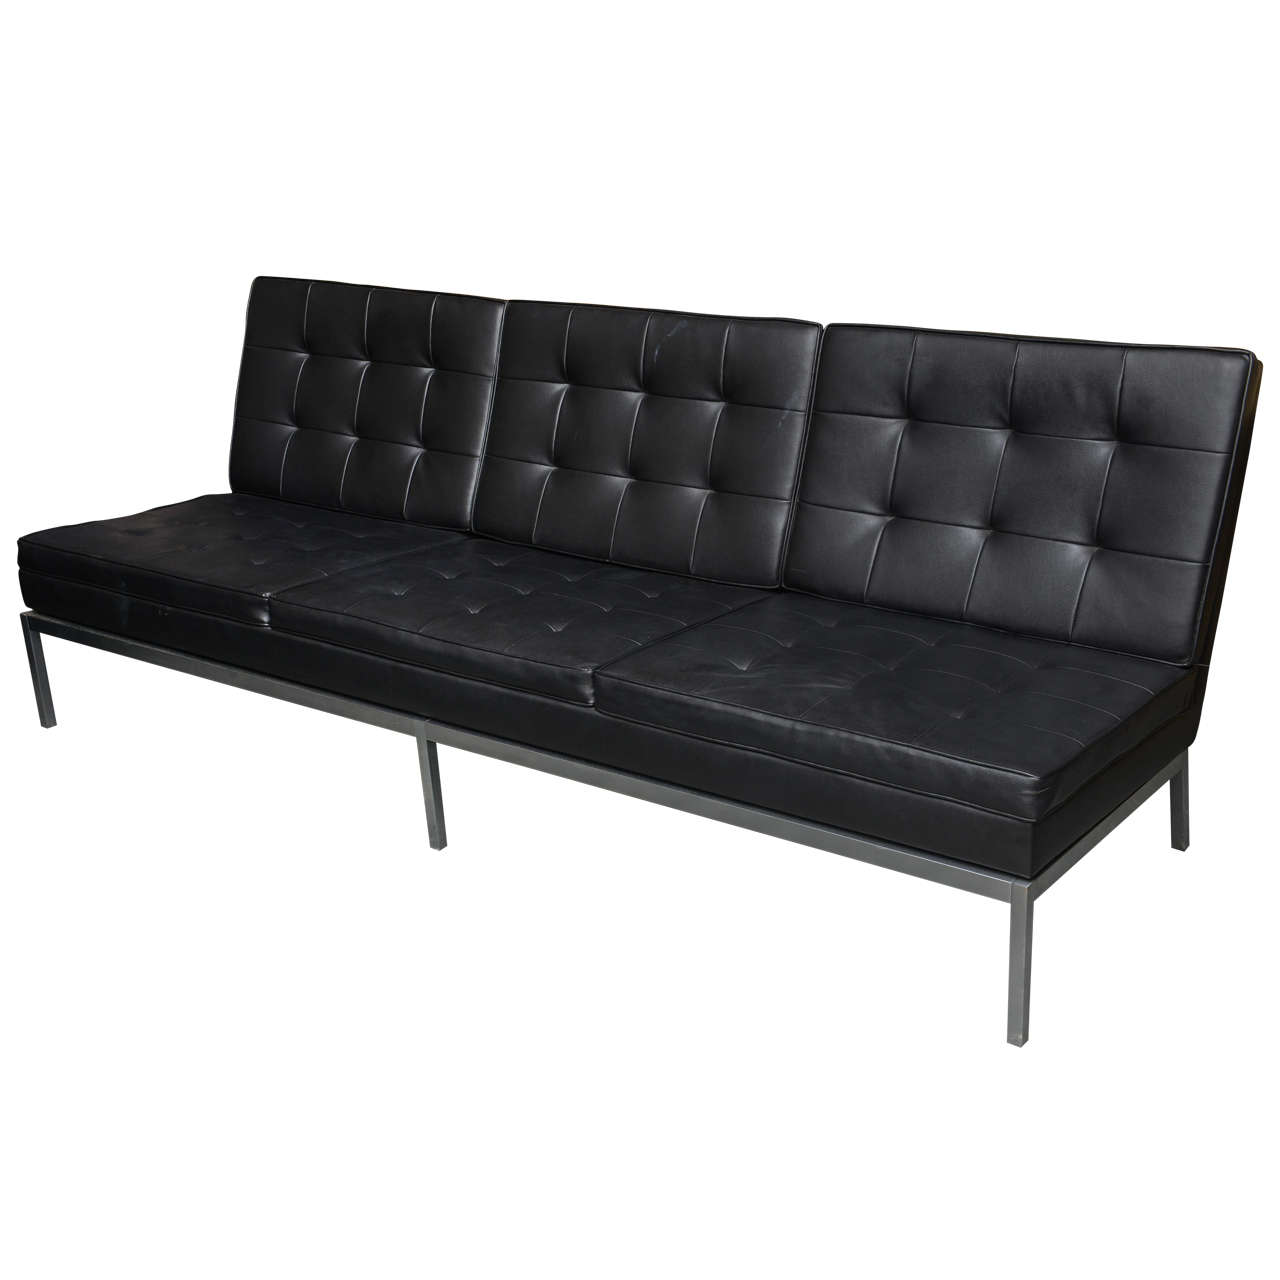 Sleek Black Leather Sofa